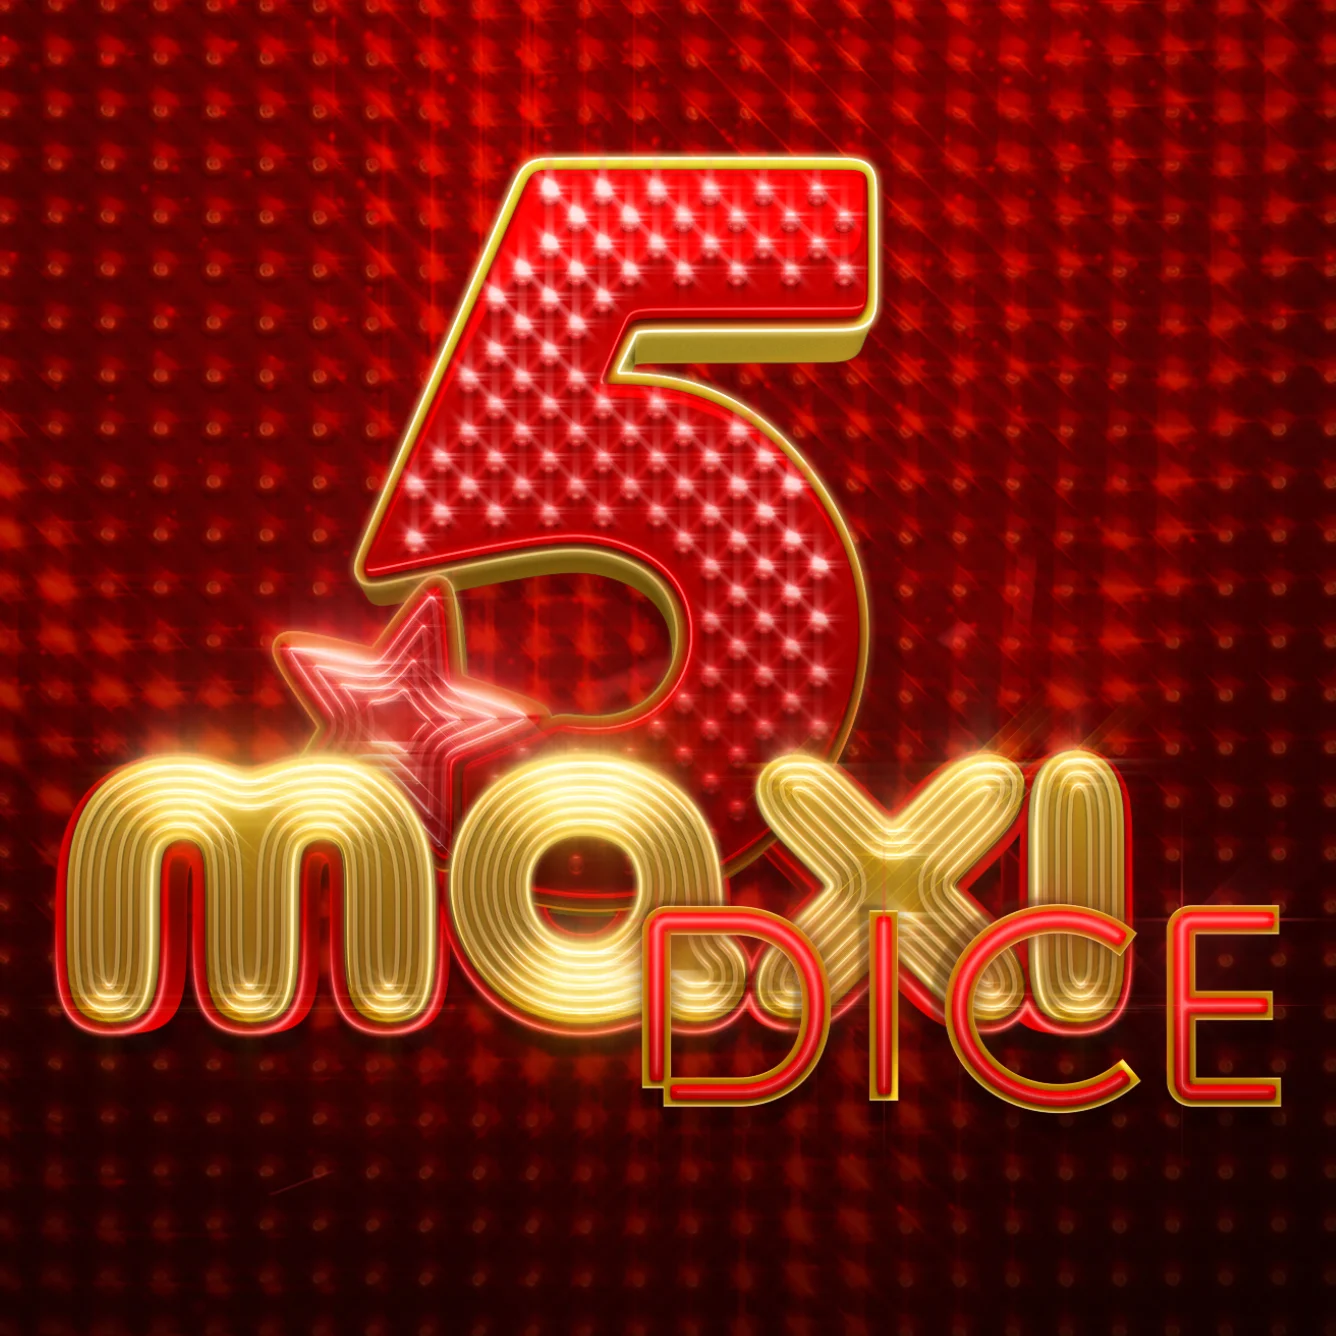 Play Maxi 5 Dice on Starcasinodice.be online casino